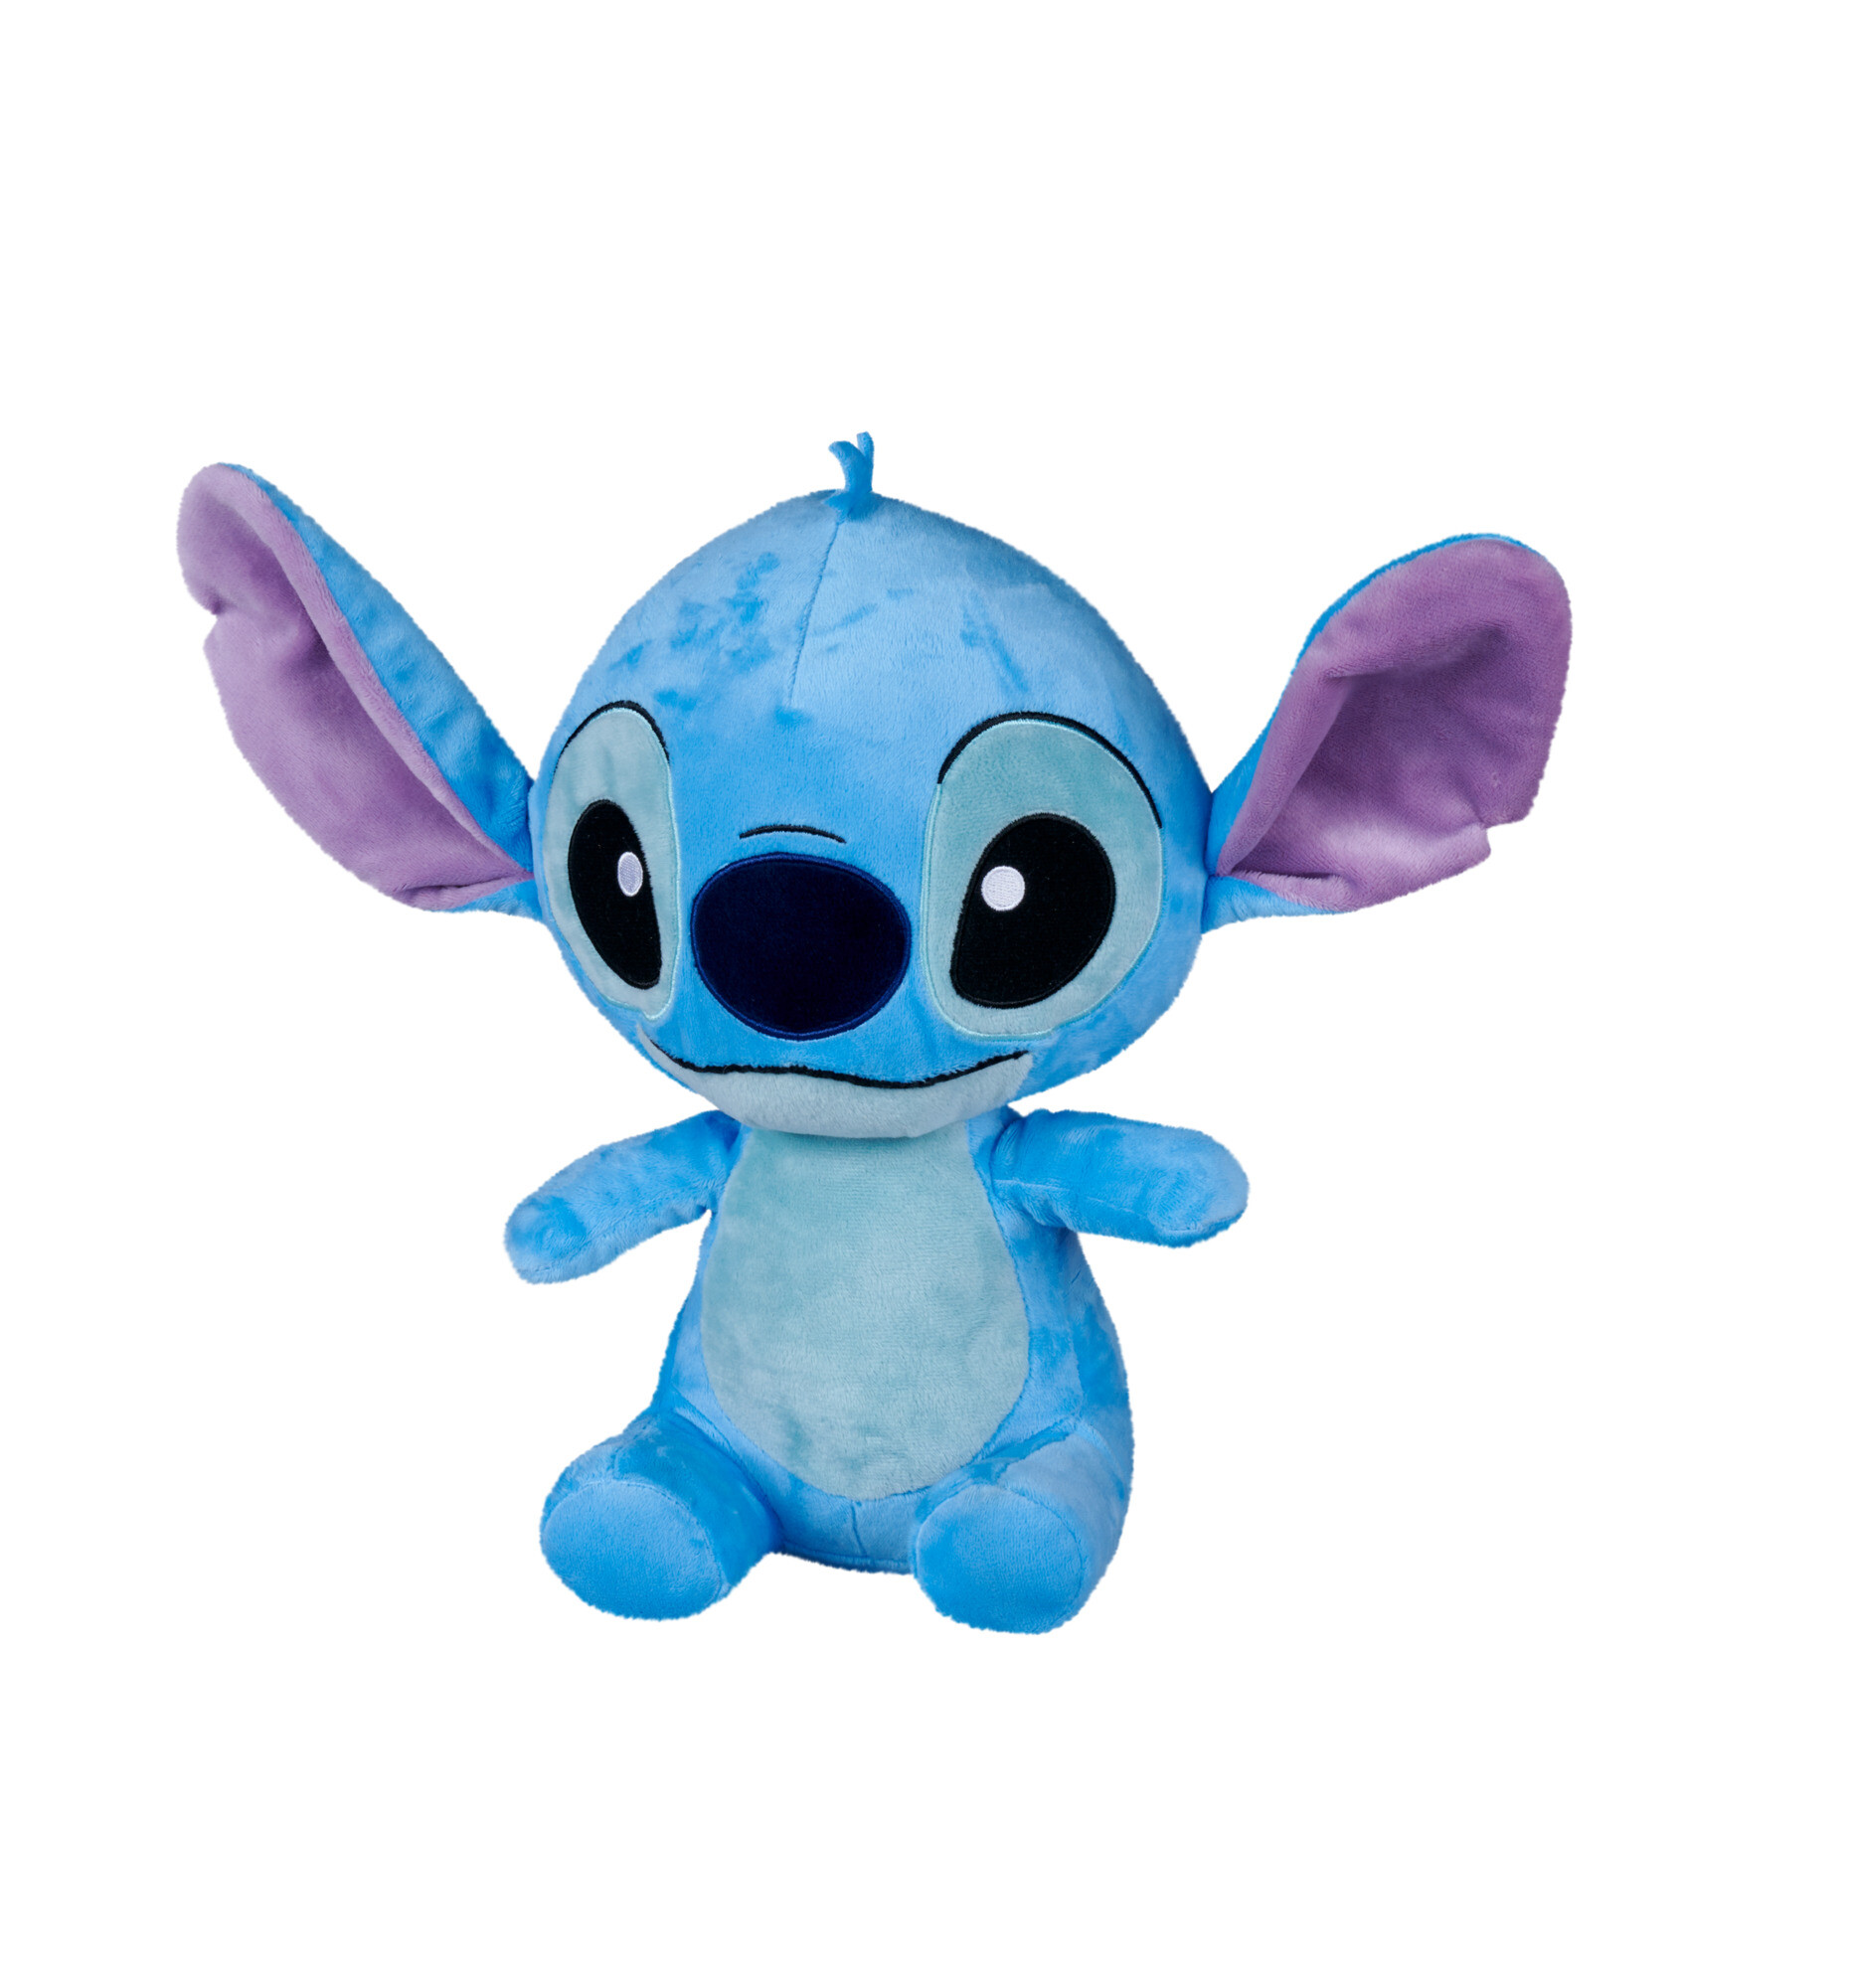 Simba disney plush stitch da 30 centimetri, adatto sin dai primi mesi di vita - Disney Stitch